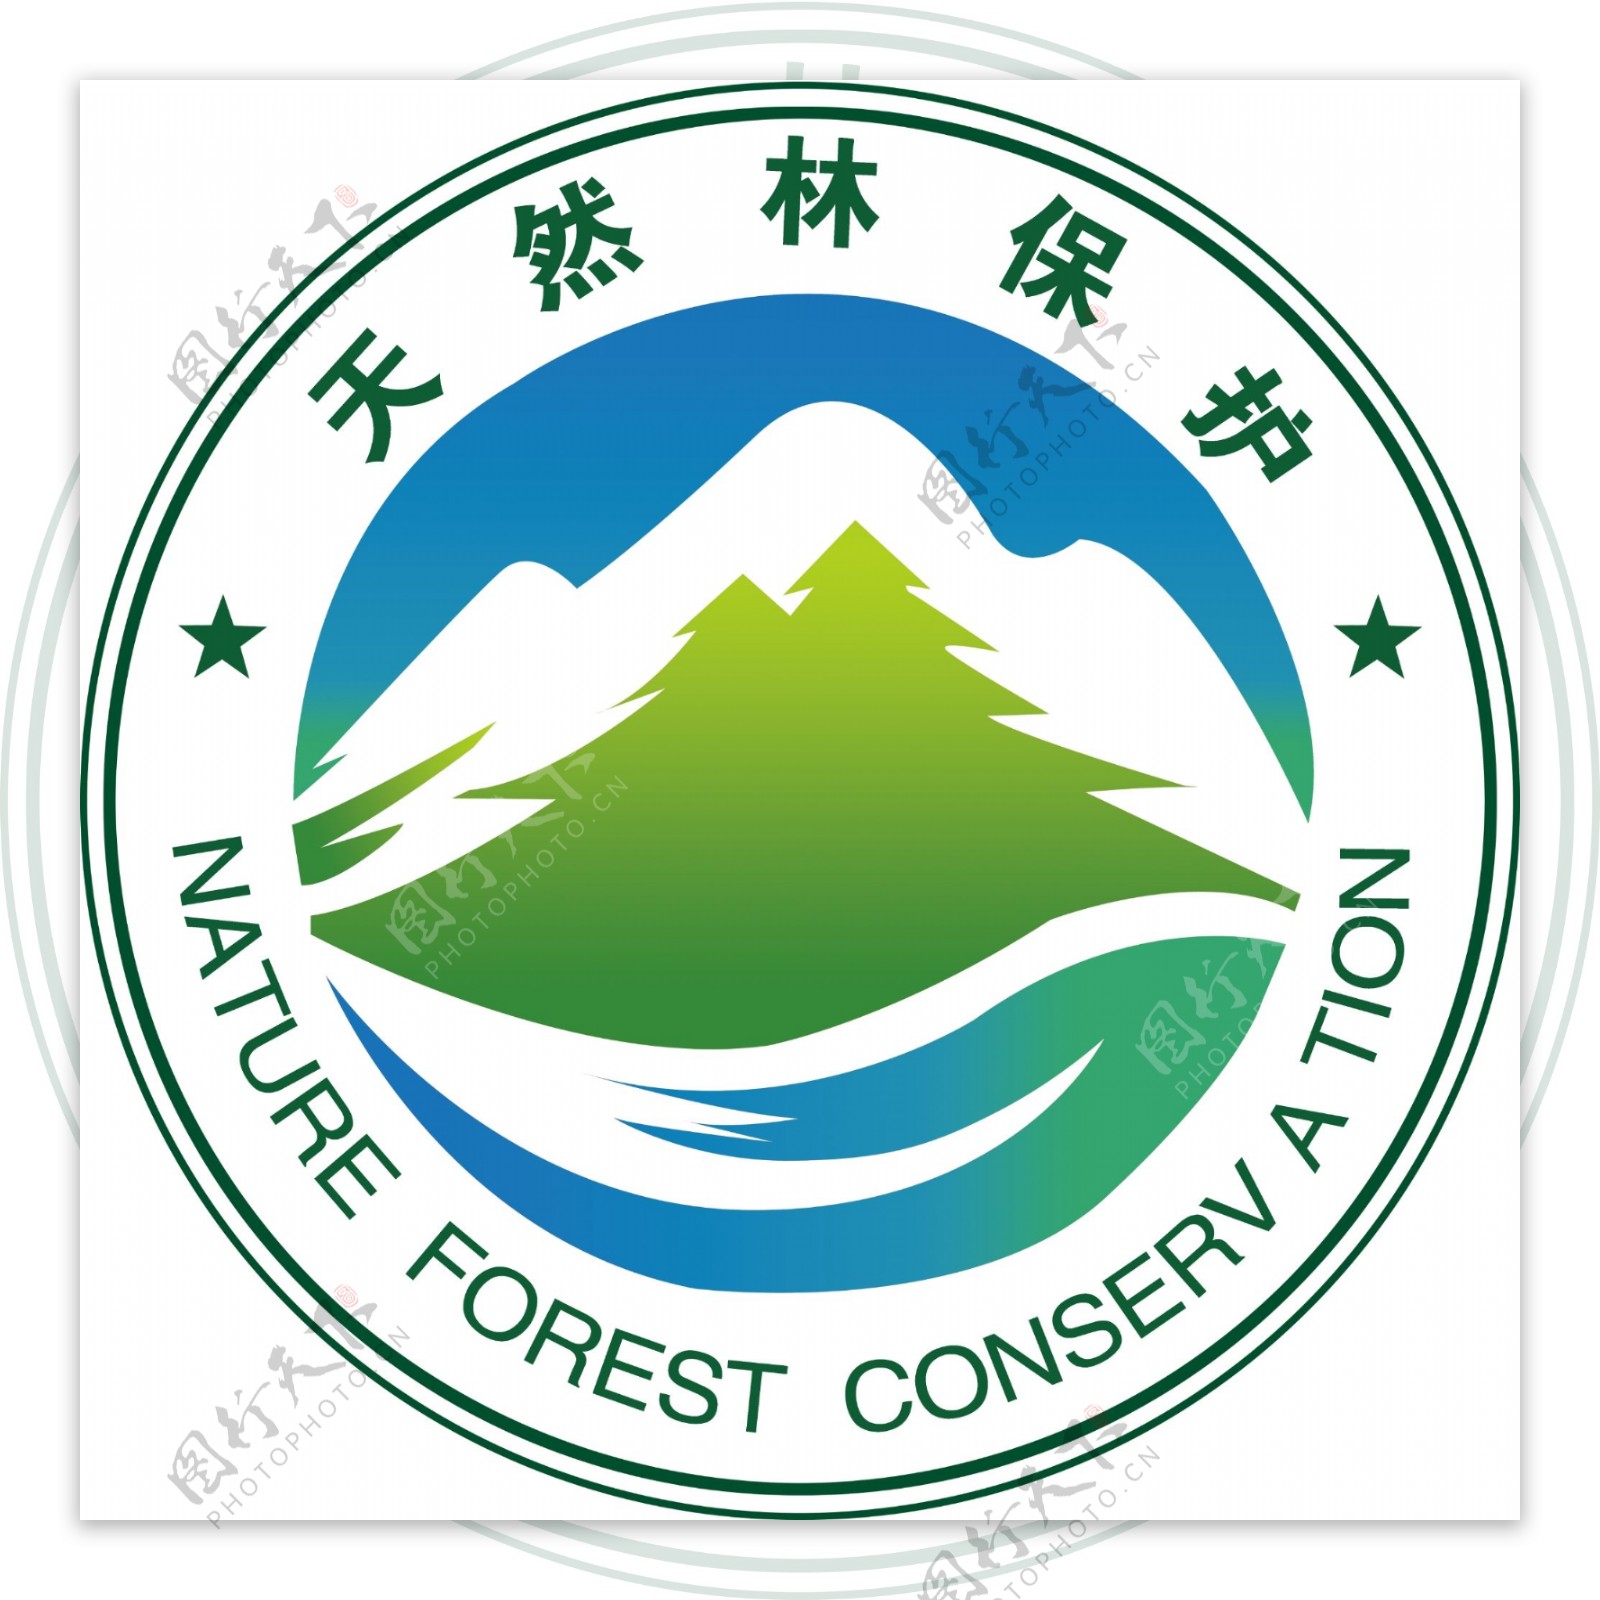 天然林l保护logo